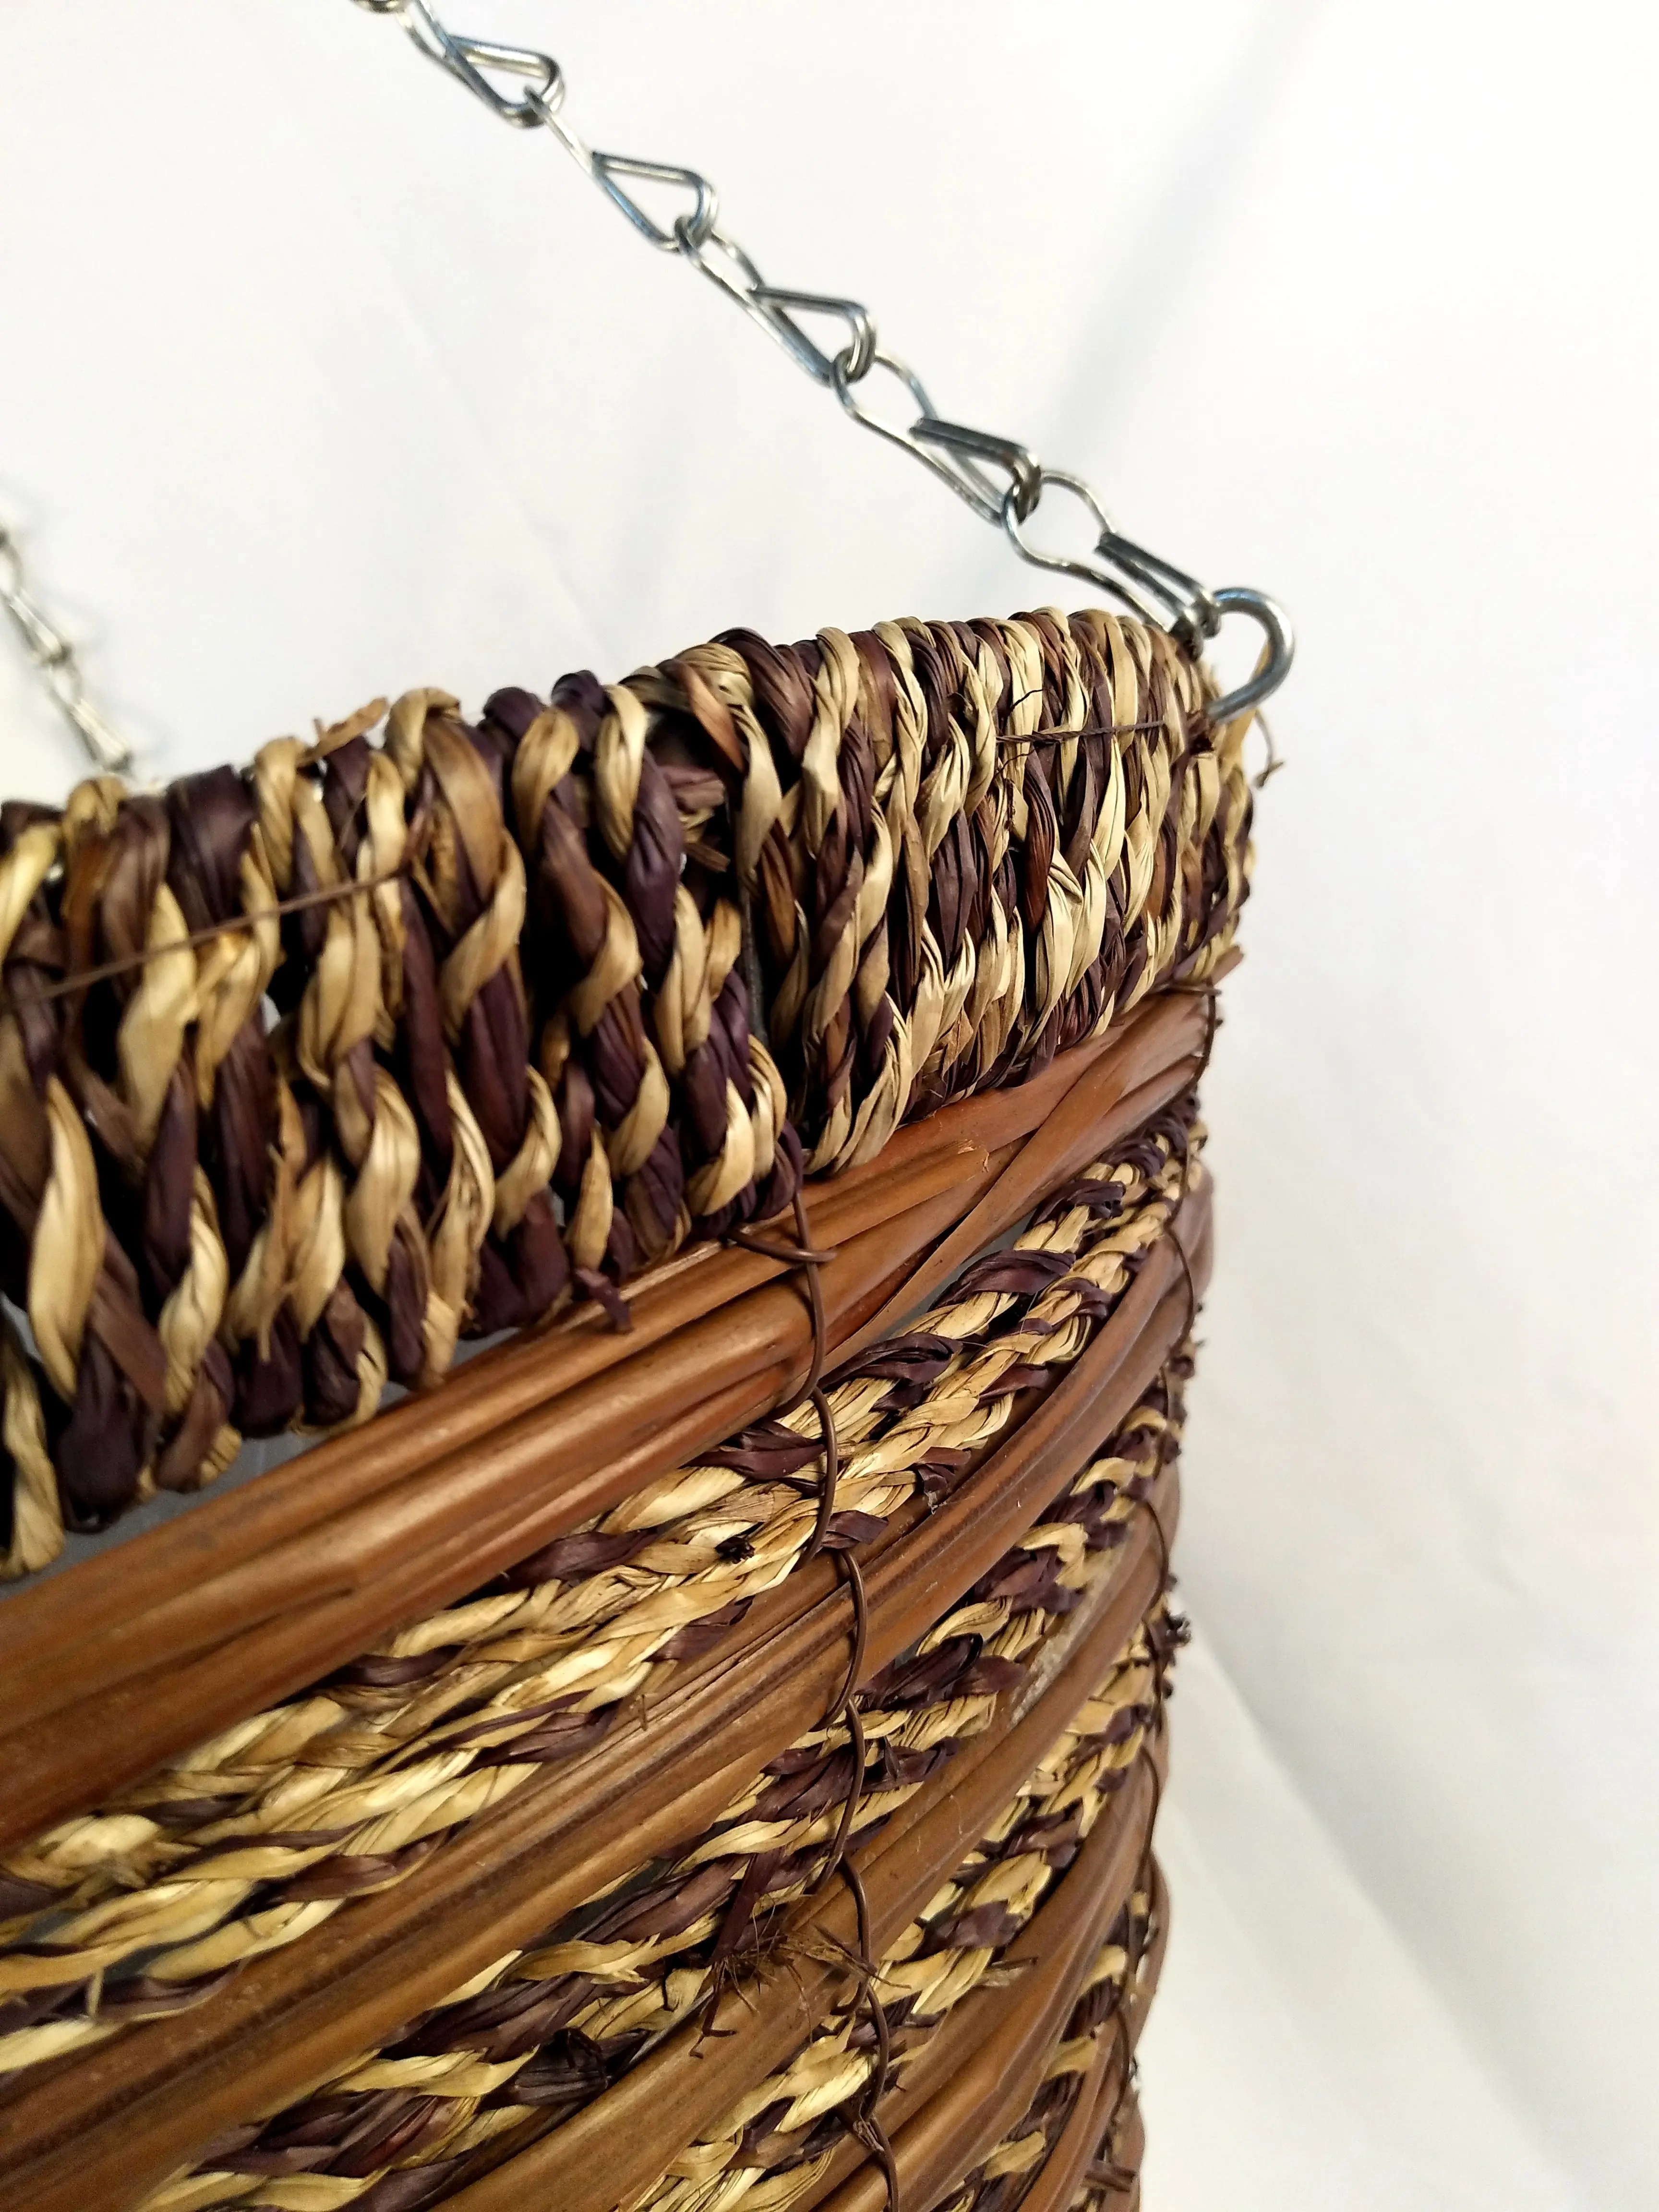 
Hot sale Wholesale Natural Seagrass Fern Hanging basket Flower Plant Pot For Home Decoration 